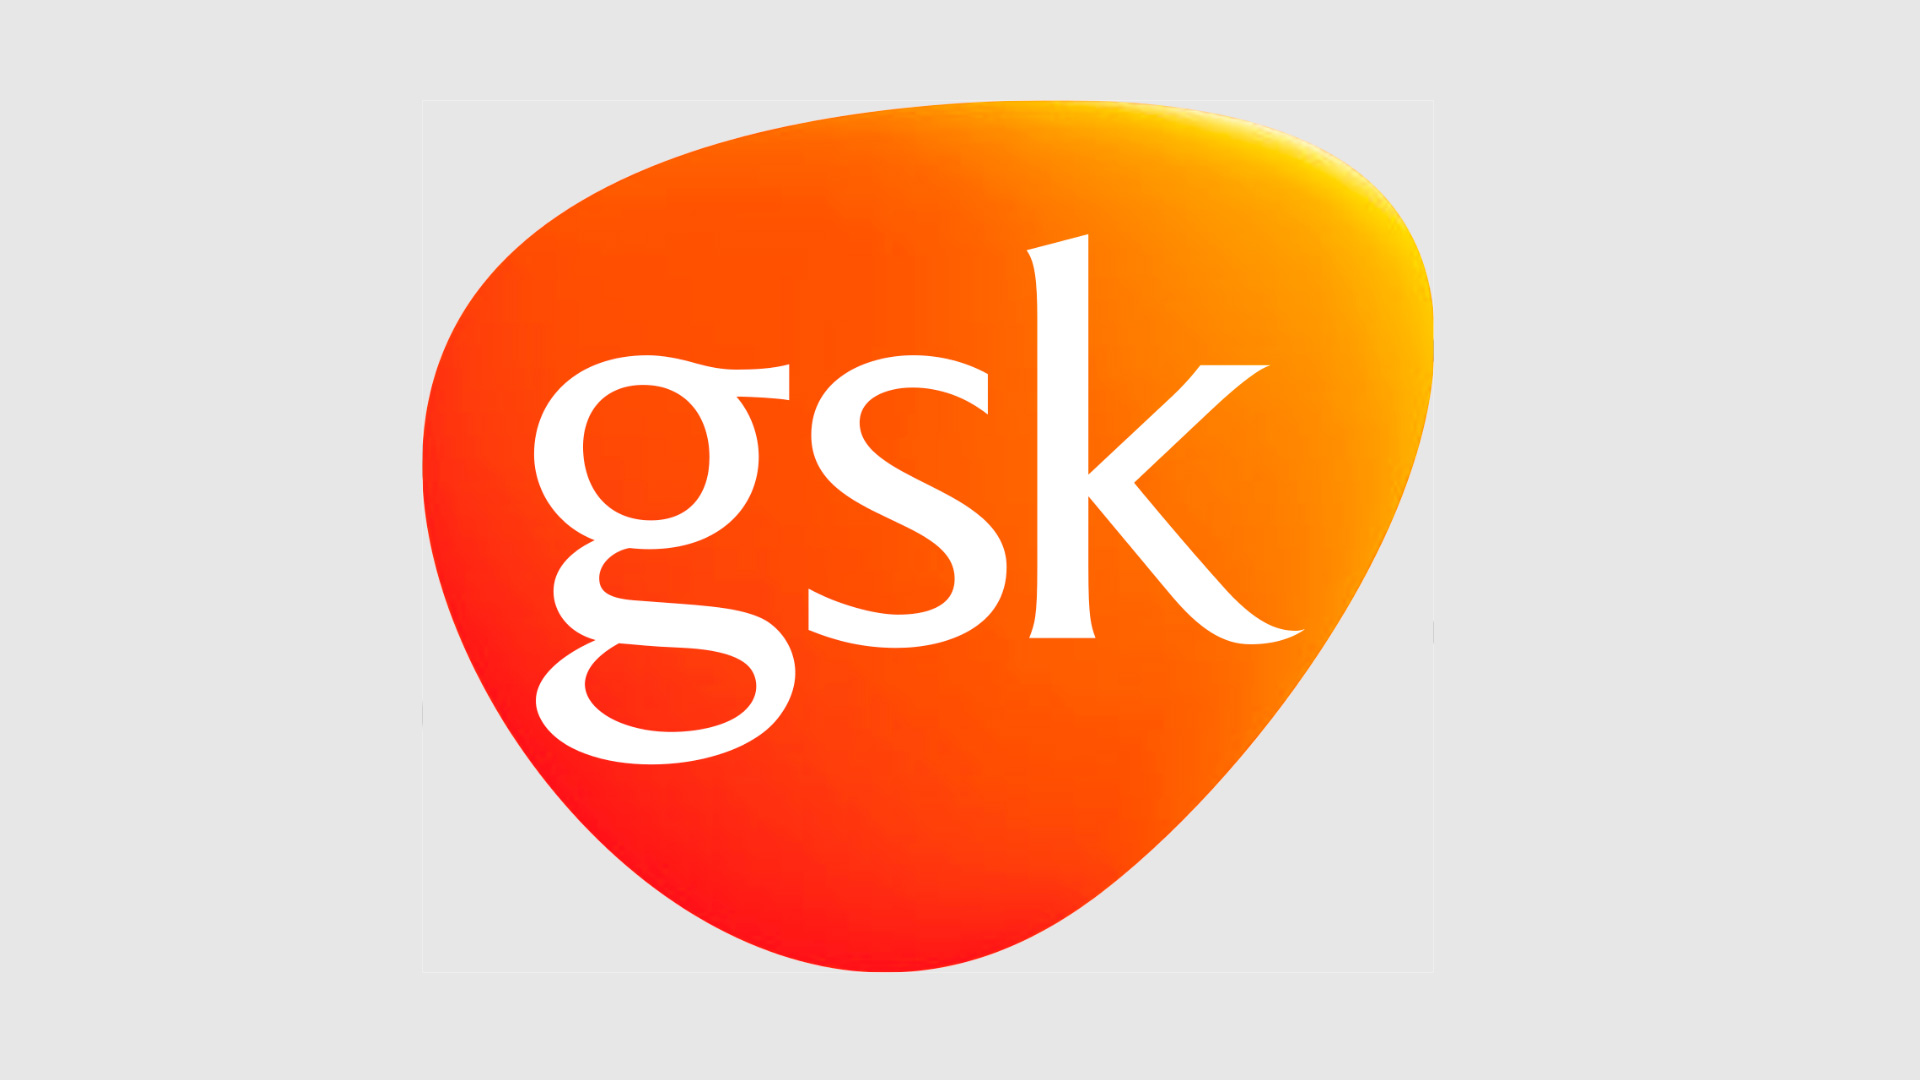 mejores-logos-farmaceutico-gsk-16